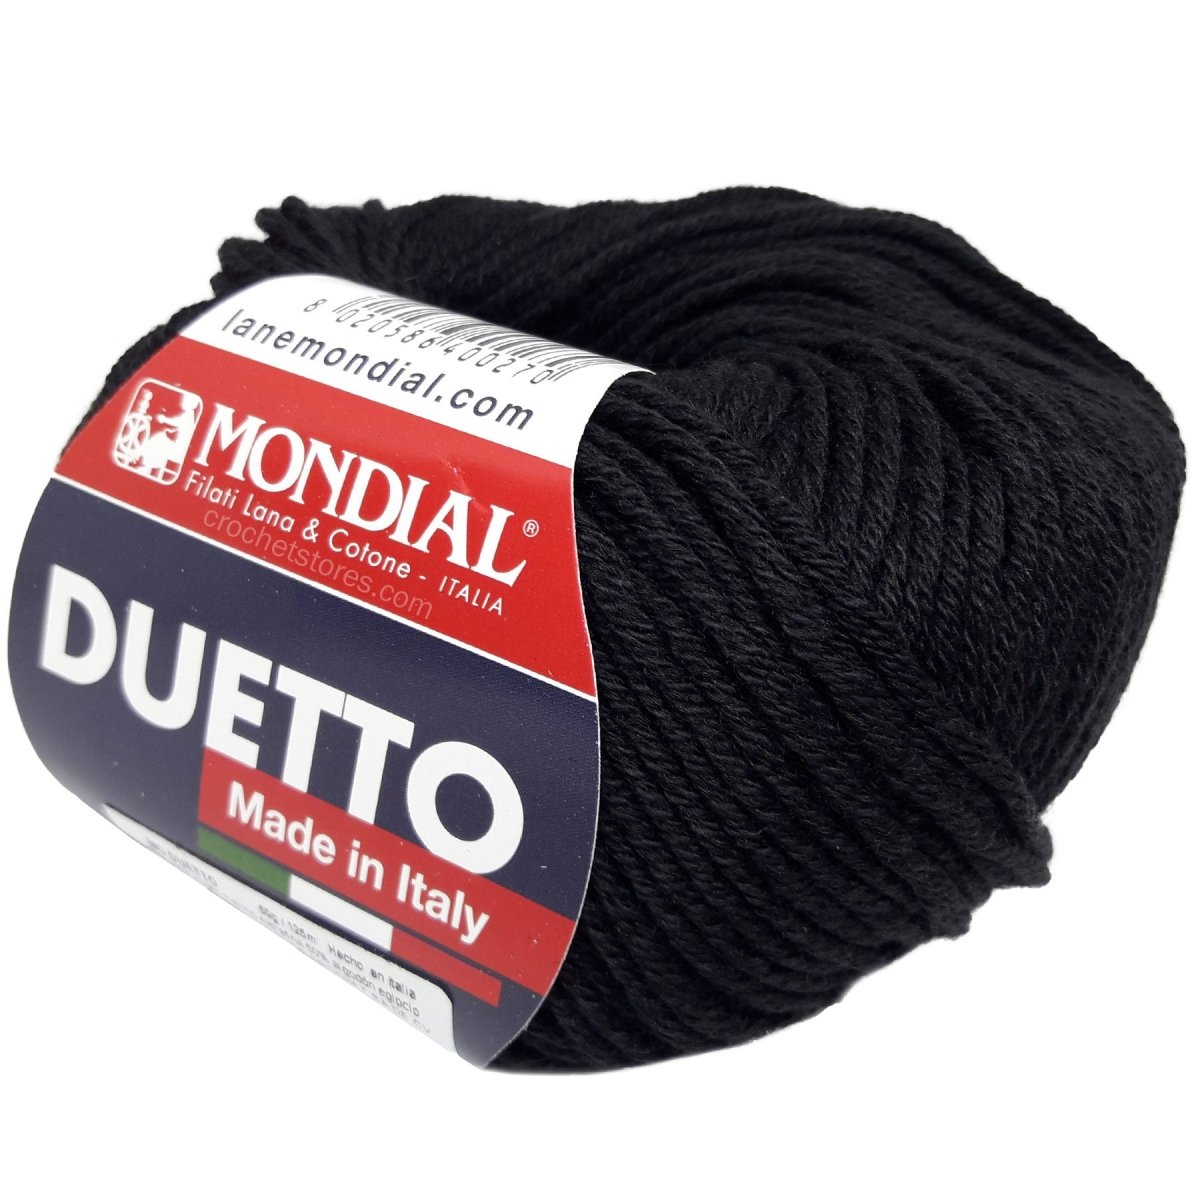 DUETTO - Crochetstores1175-2008020586400270